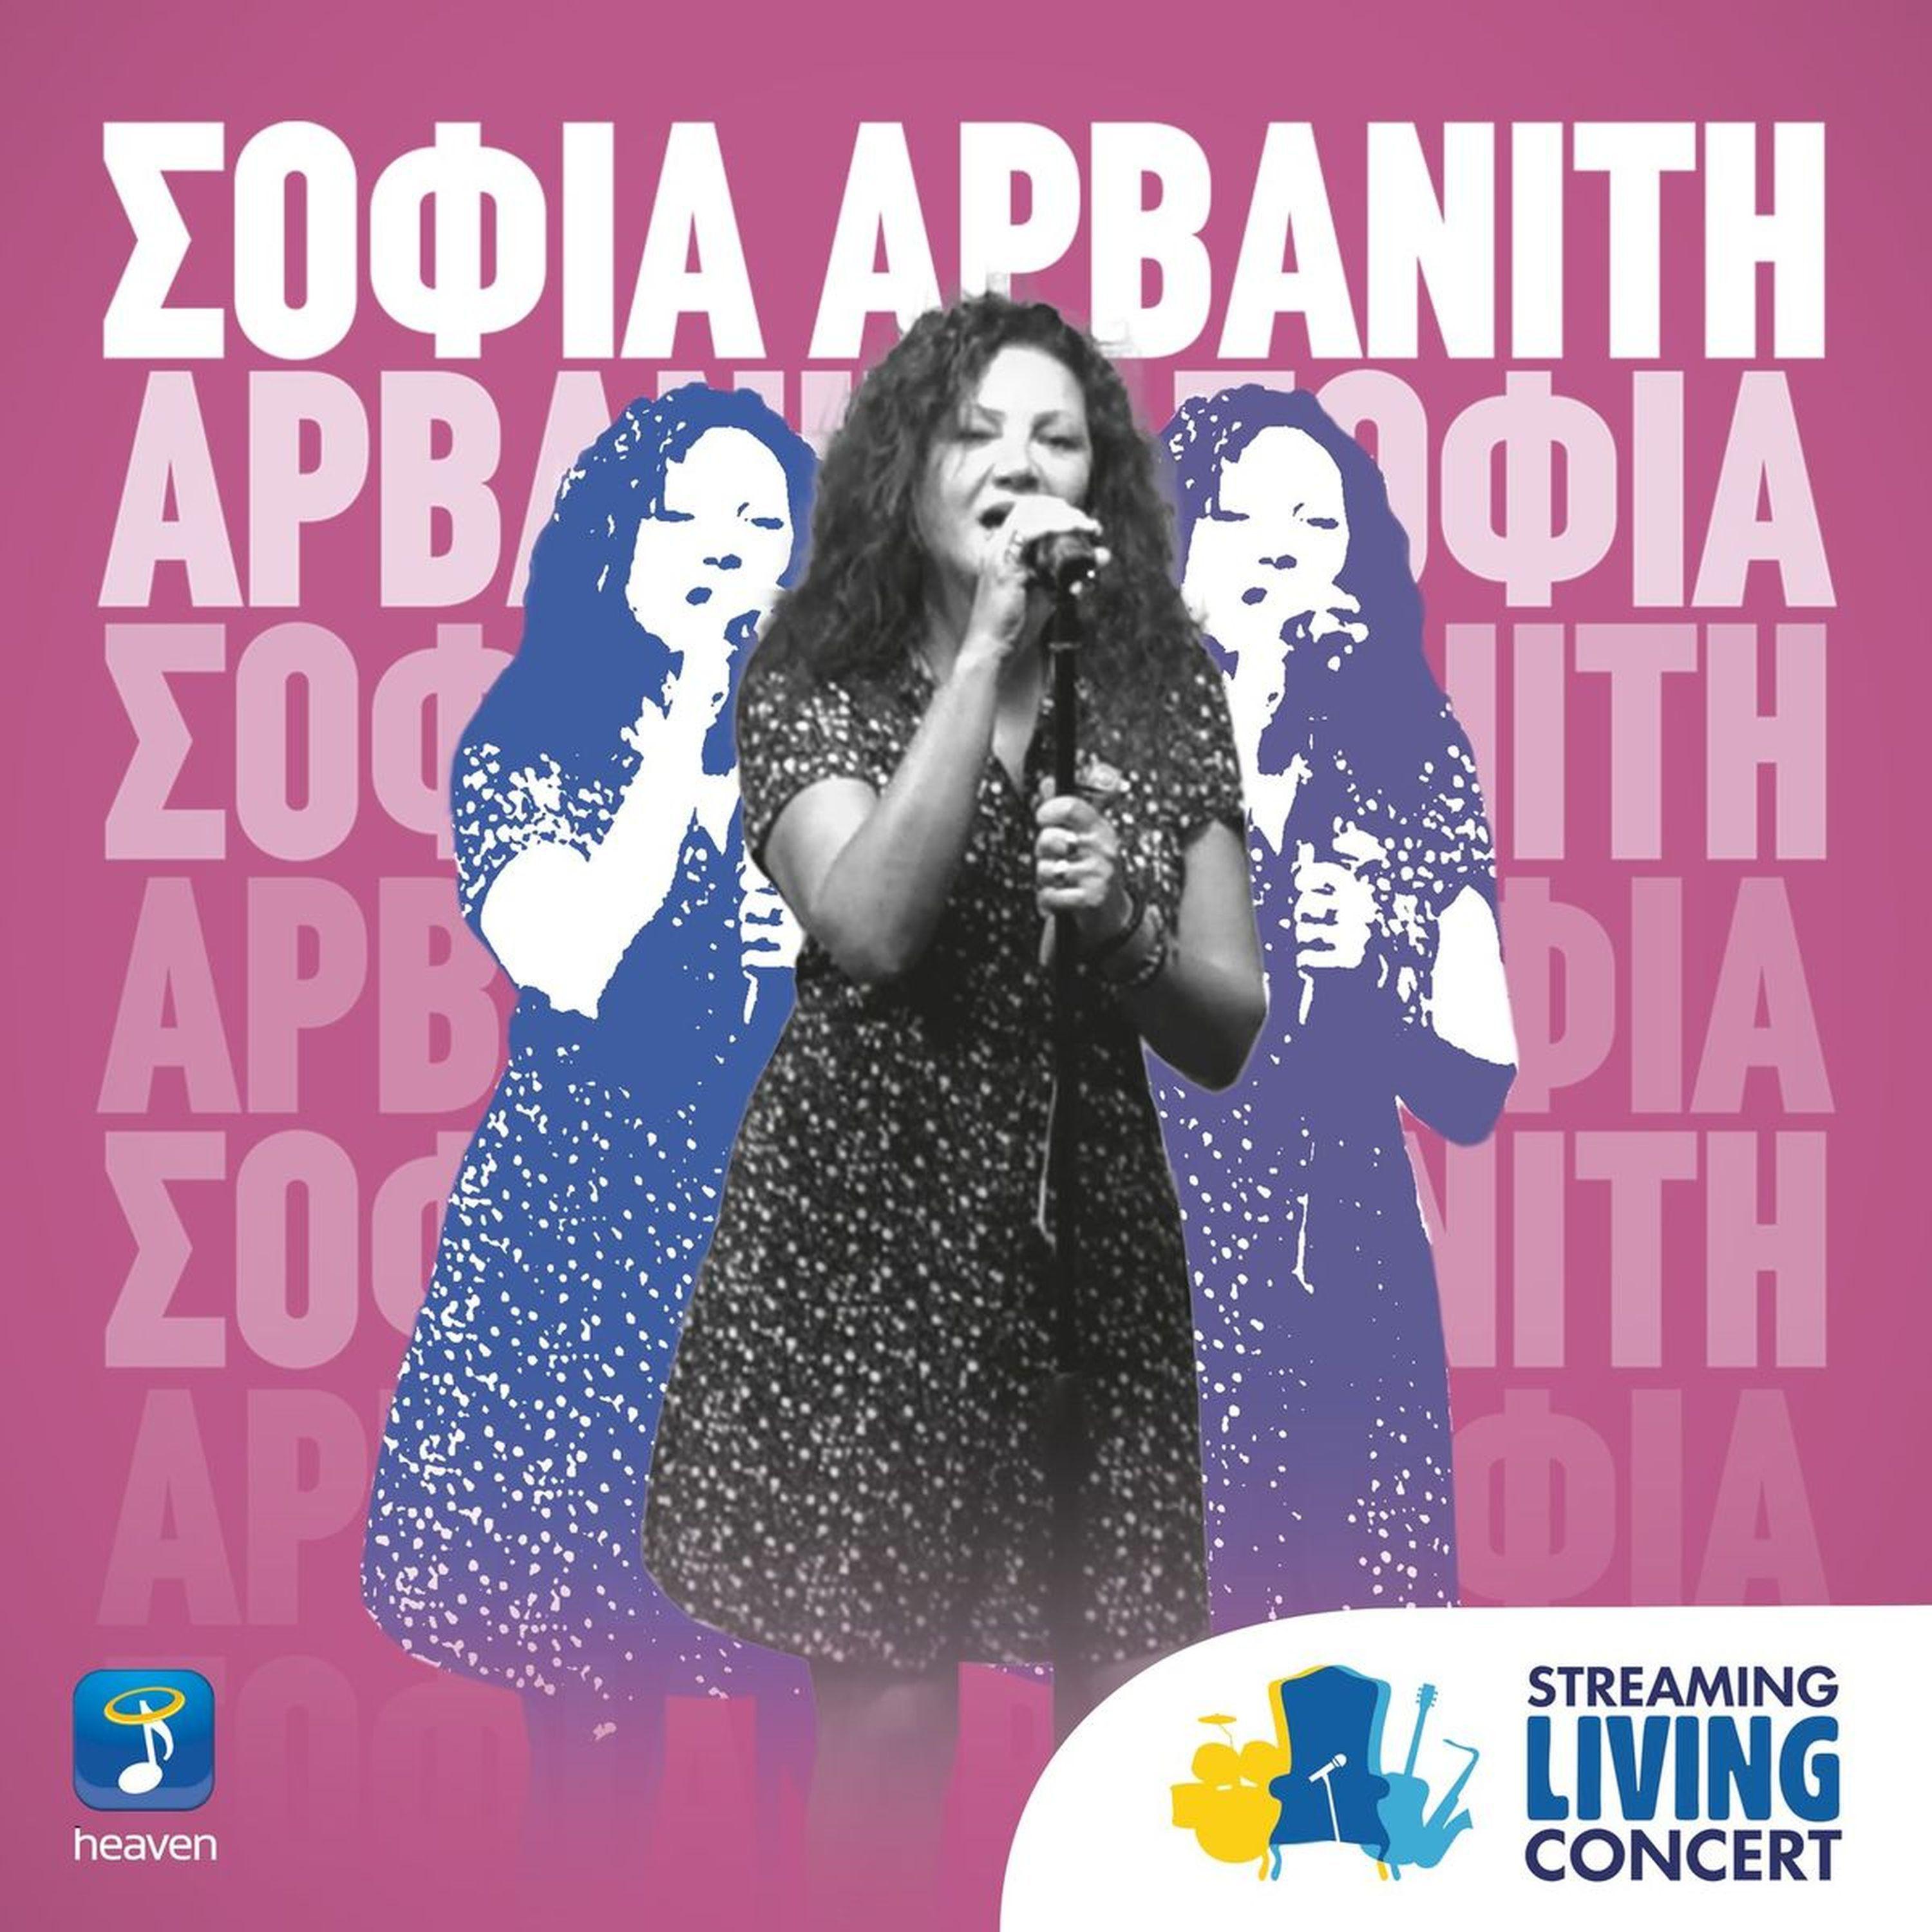 Sofia Arvaniti - San Proti Fora (Streaming Living Concert)